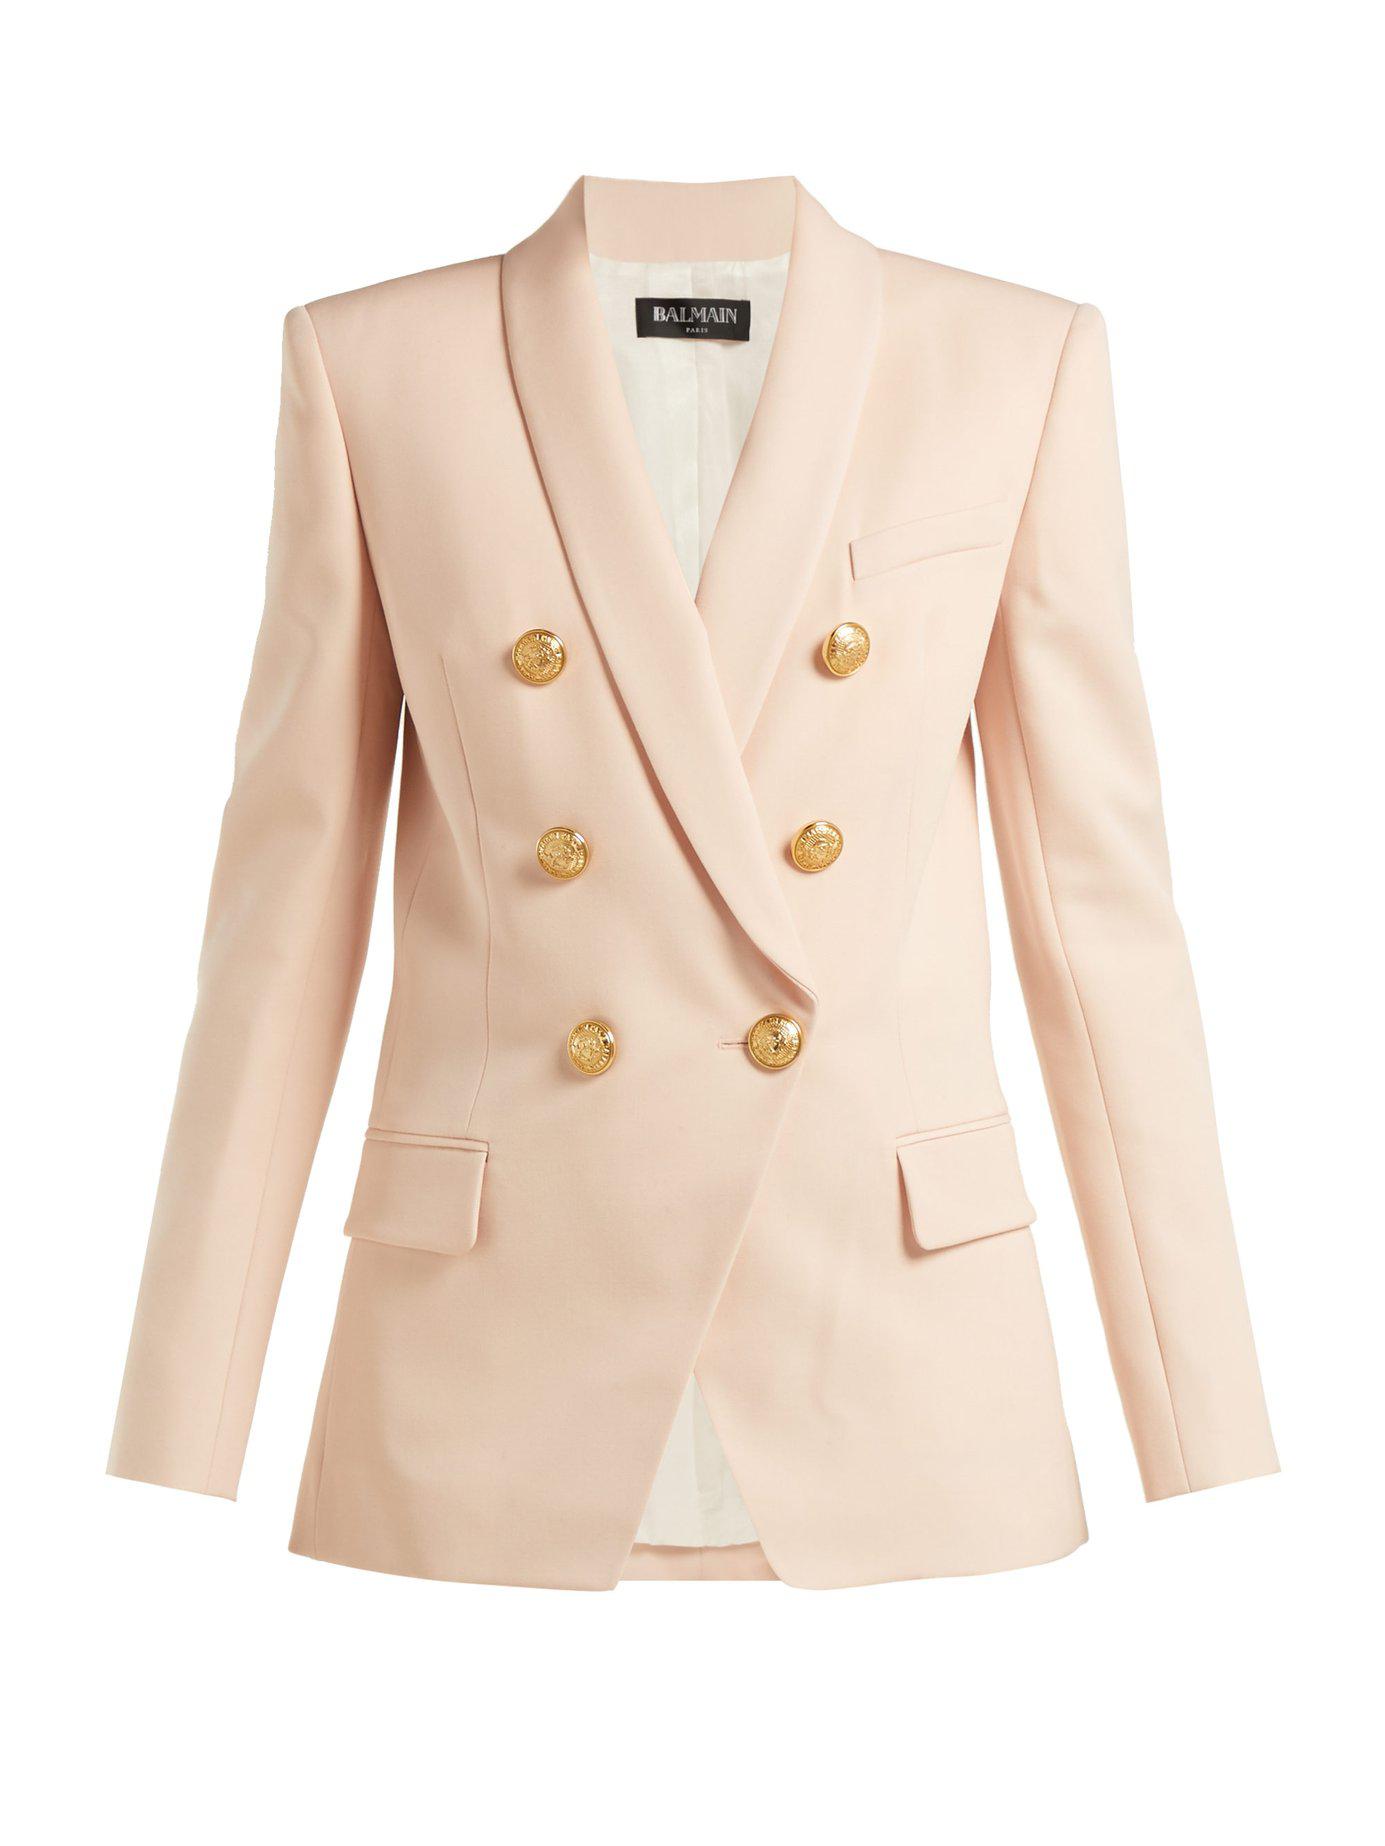 Balmain Long Double-breasted Wool Blazer in Light Pink (Pink) - Lyst